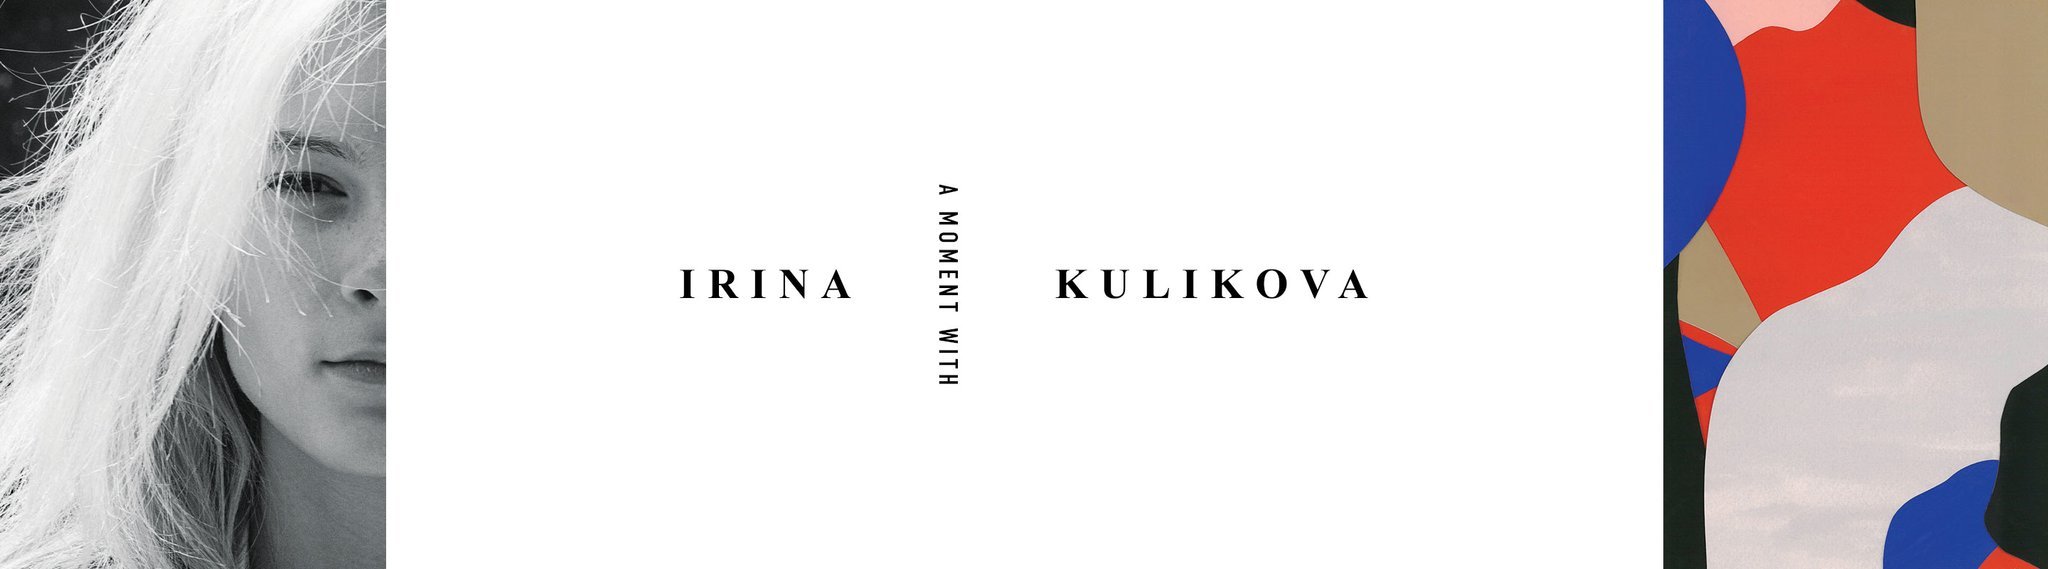 A MOMENT WITH IRINA KULIKOVA